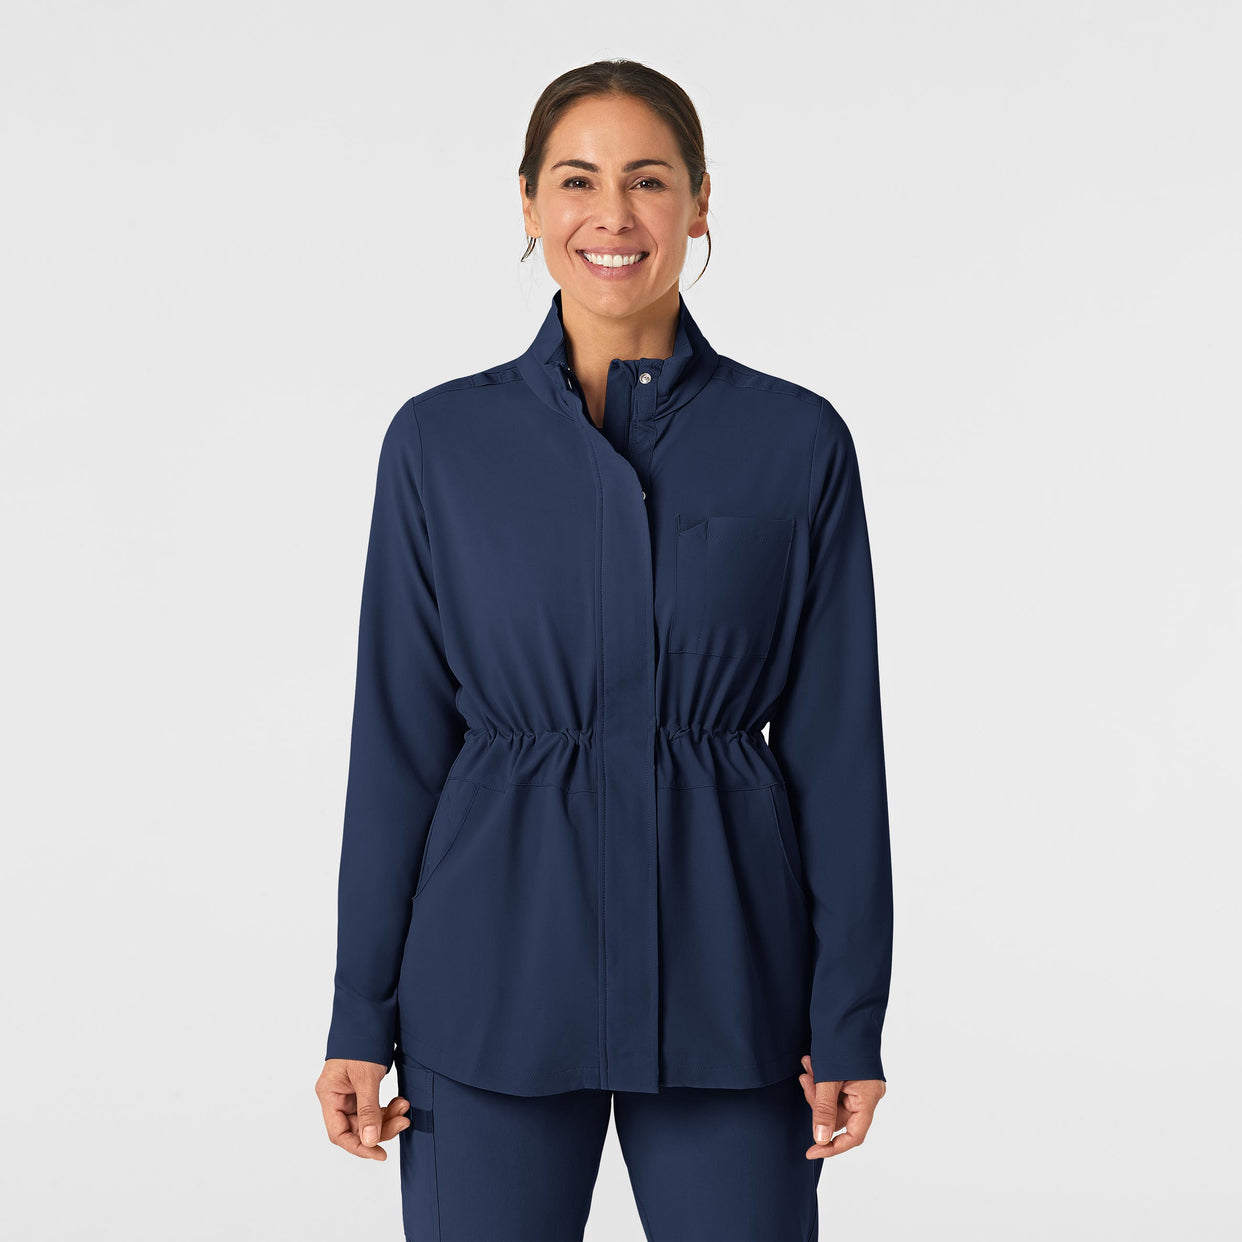 RENEW Women's Convertible Hood Fashion Jacket - Navy